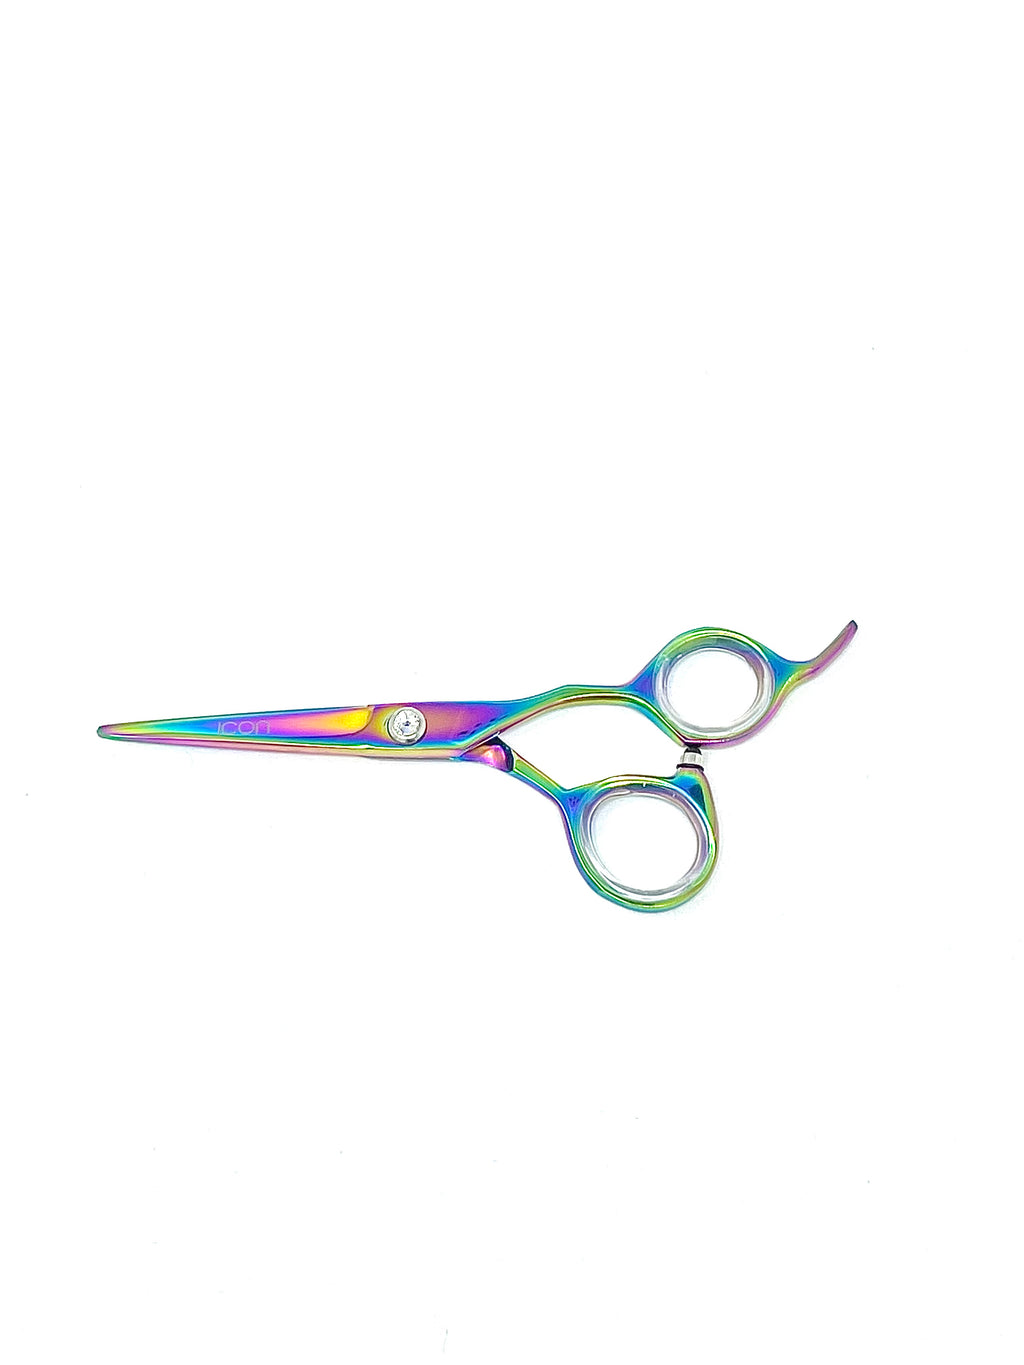 Professional 5.5 Titanium Hairdressing Scissors Shears 100% J2